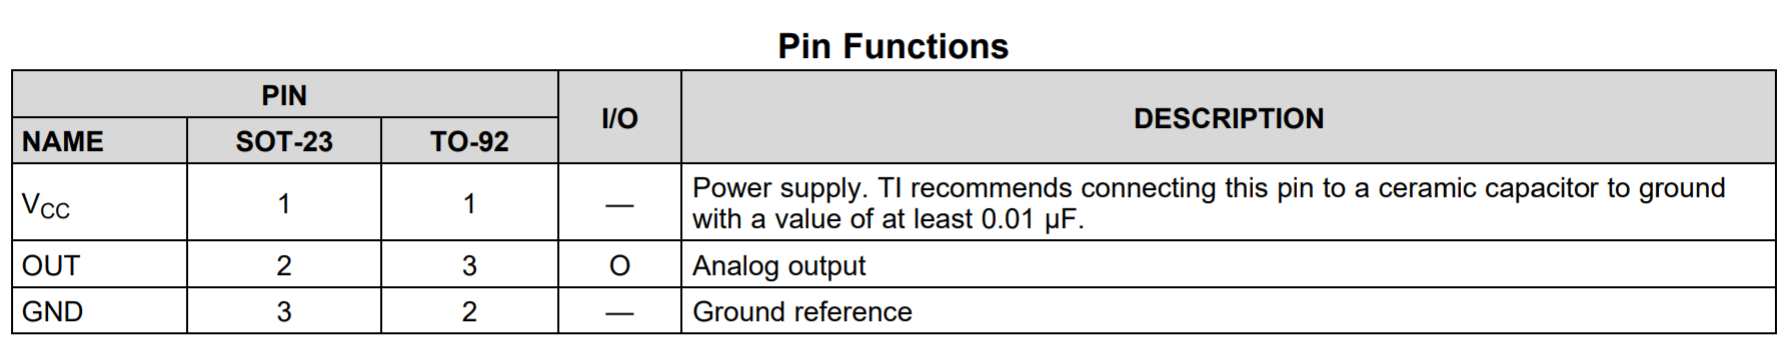 Screenshot of pin configurations from datasheet